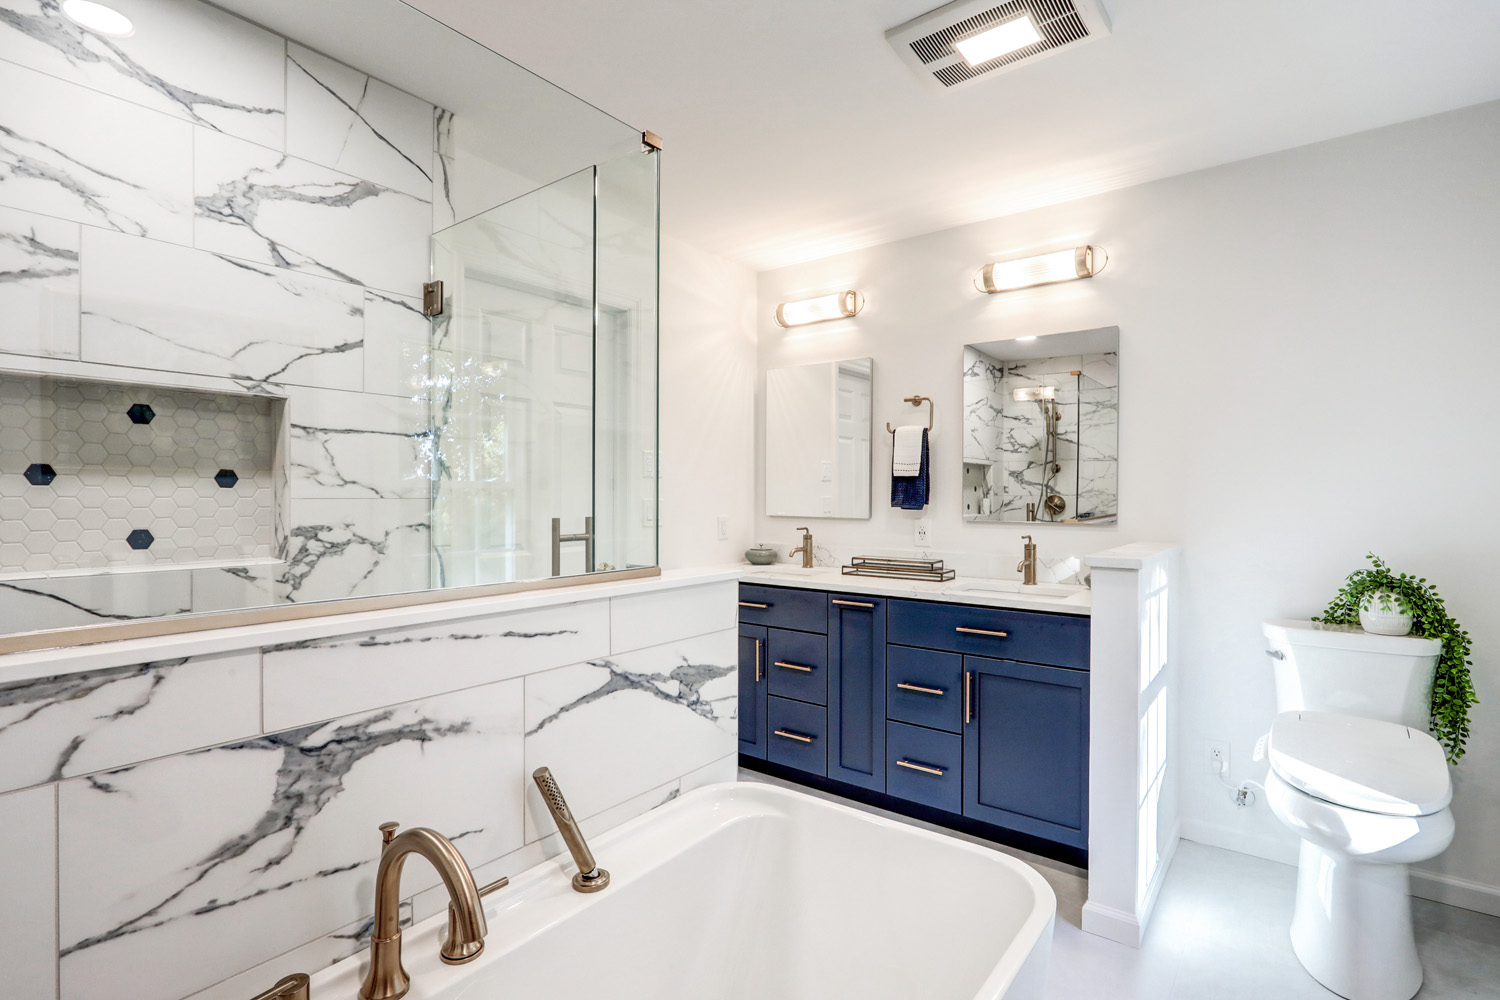 Hempfield Master Bathroom Remodel with tile shower